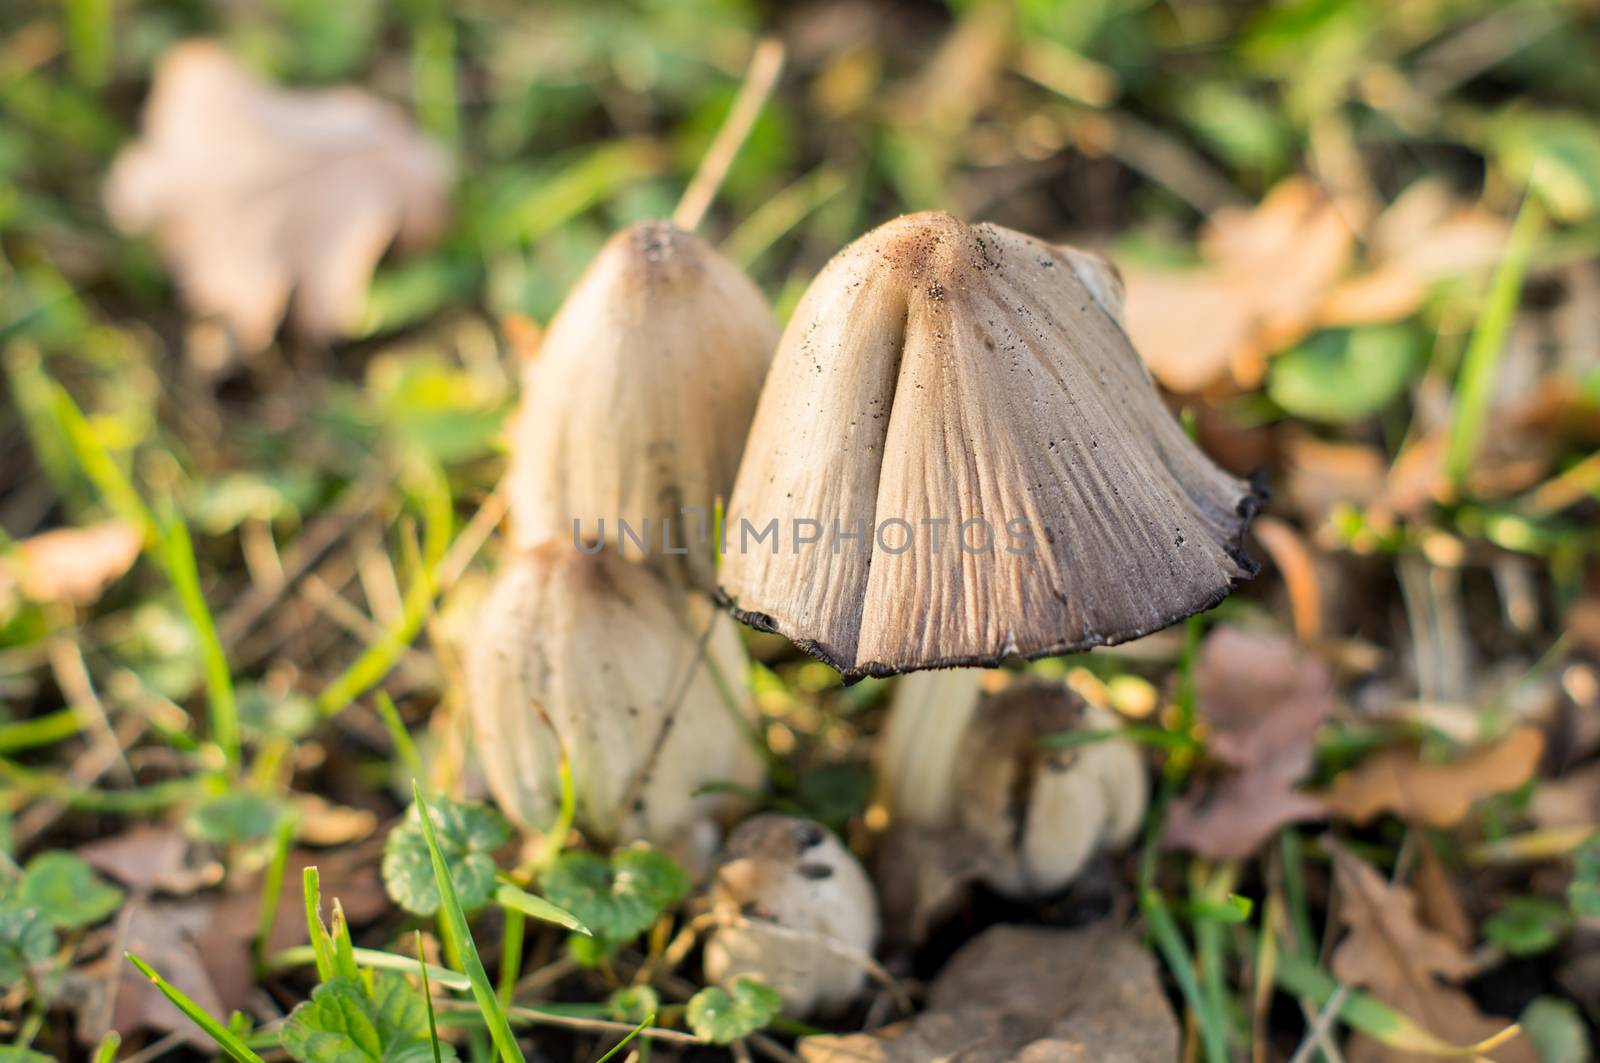 poisonous mushroom by serhii_lohvyniuk